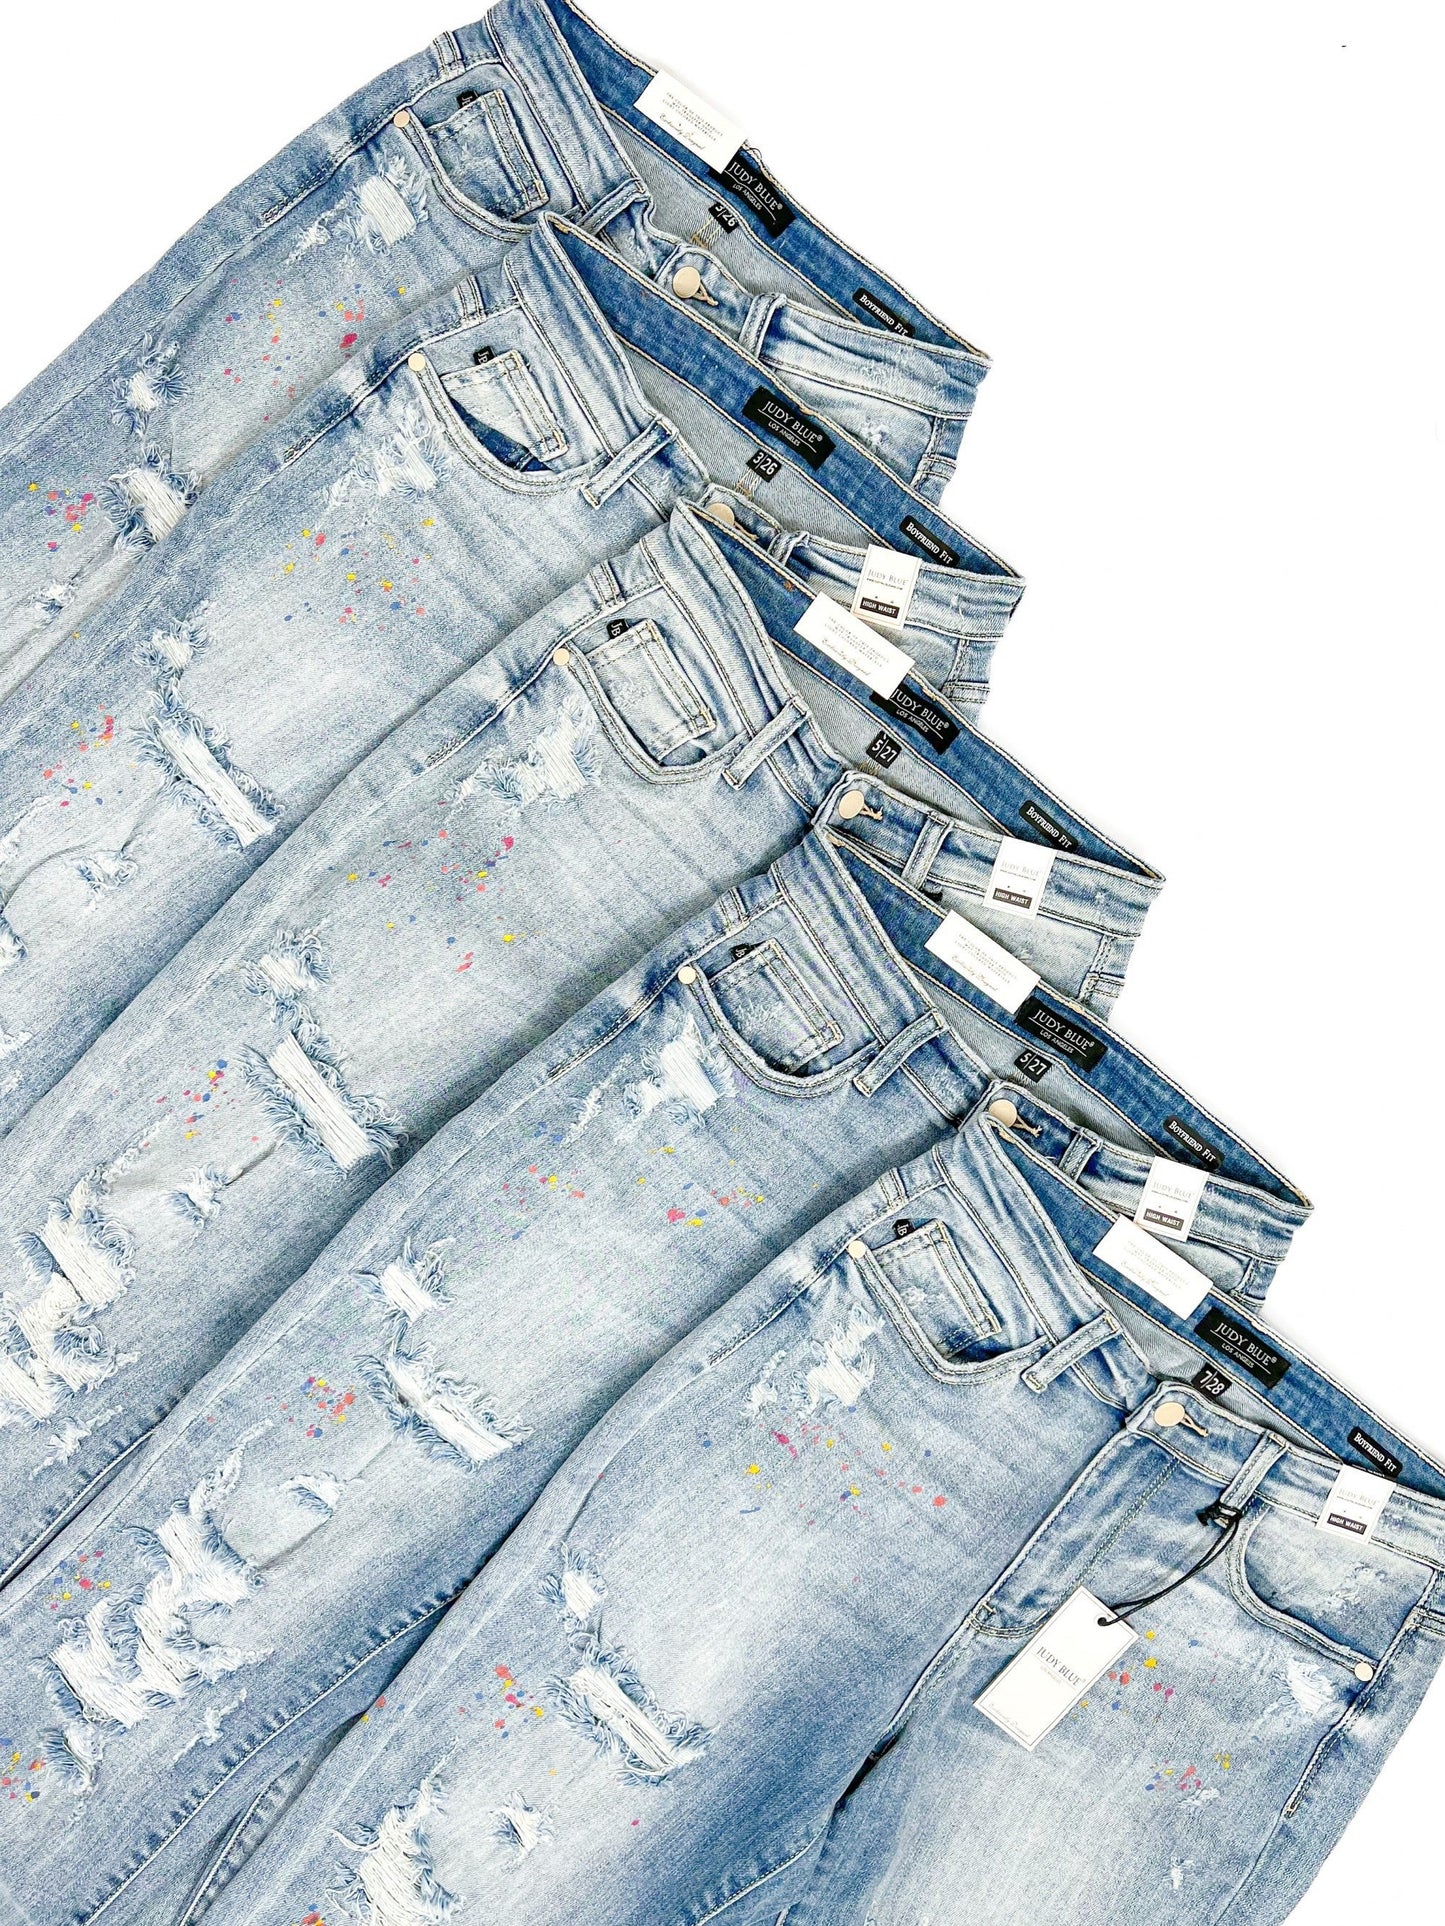 Plus/Reg Judy Blue High Rise Distressed Paint Splatter Jeans 82398Reg & PL